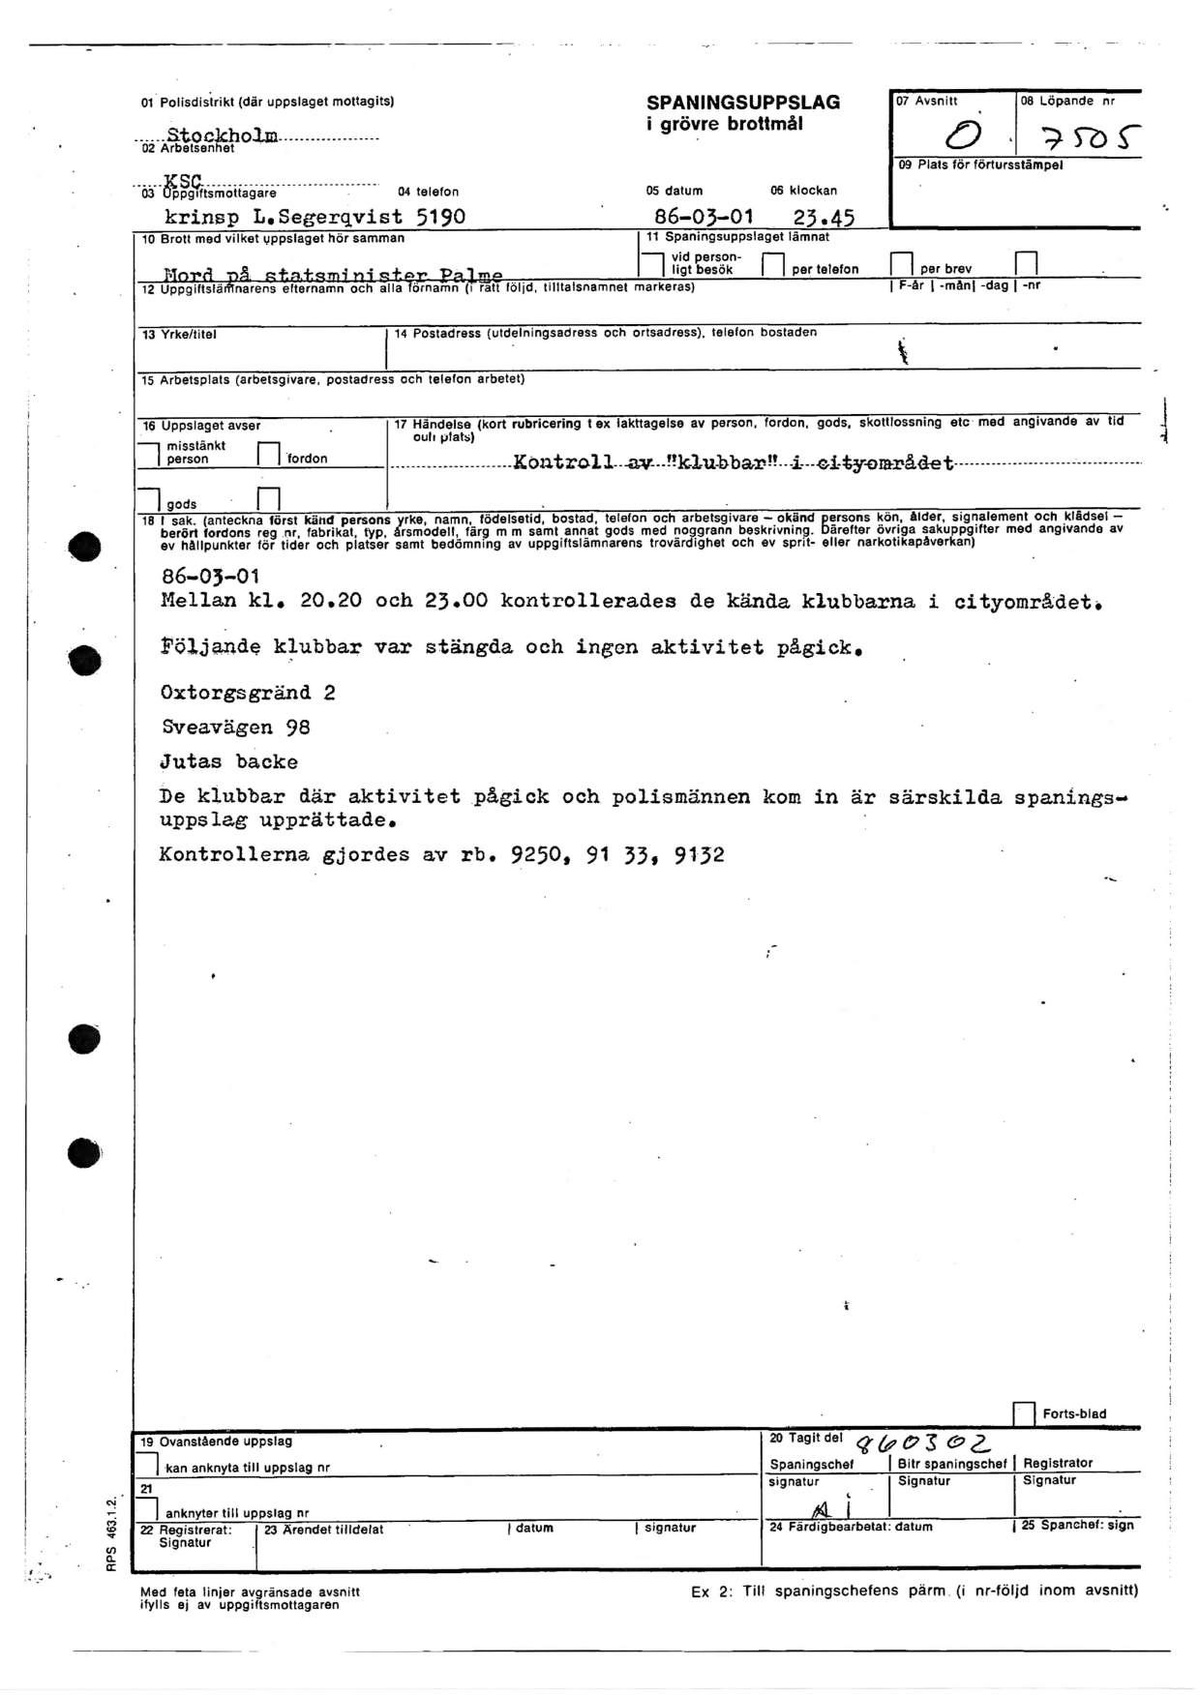 Pol-1986-03-01 2345 O7505-00 Kontroll av klubbar i cityområdet .pdf